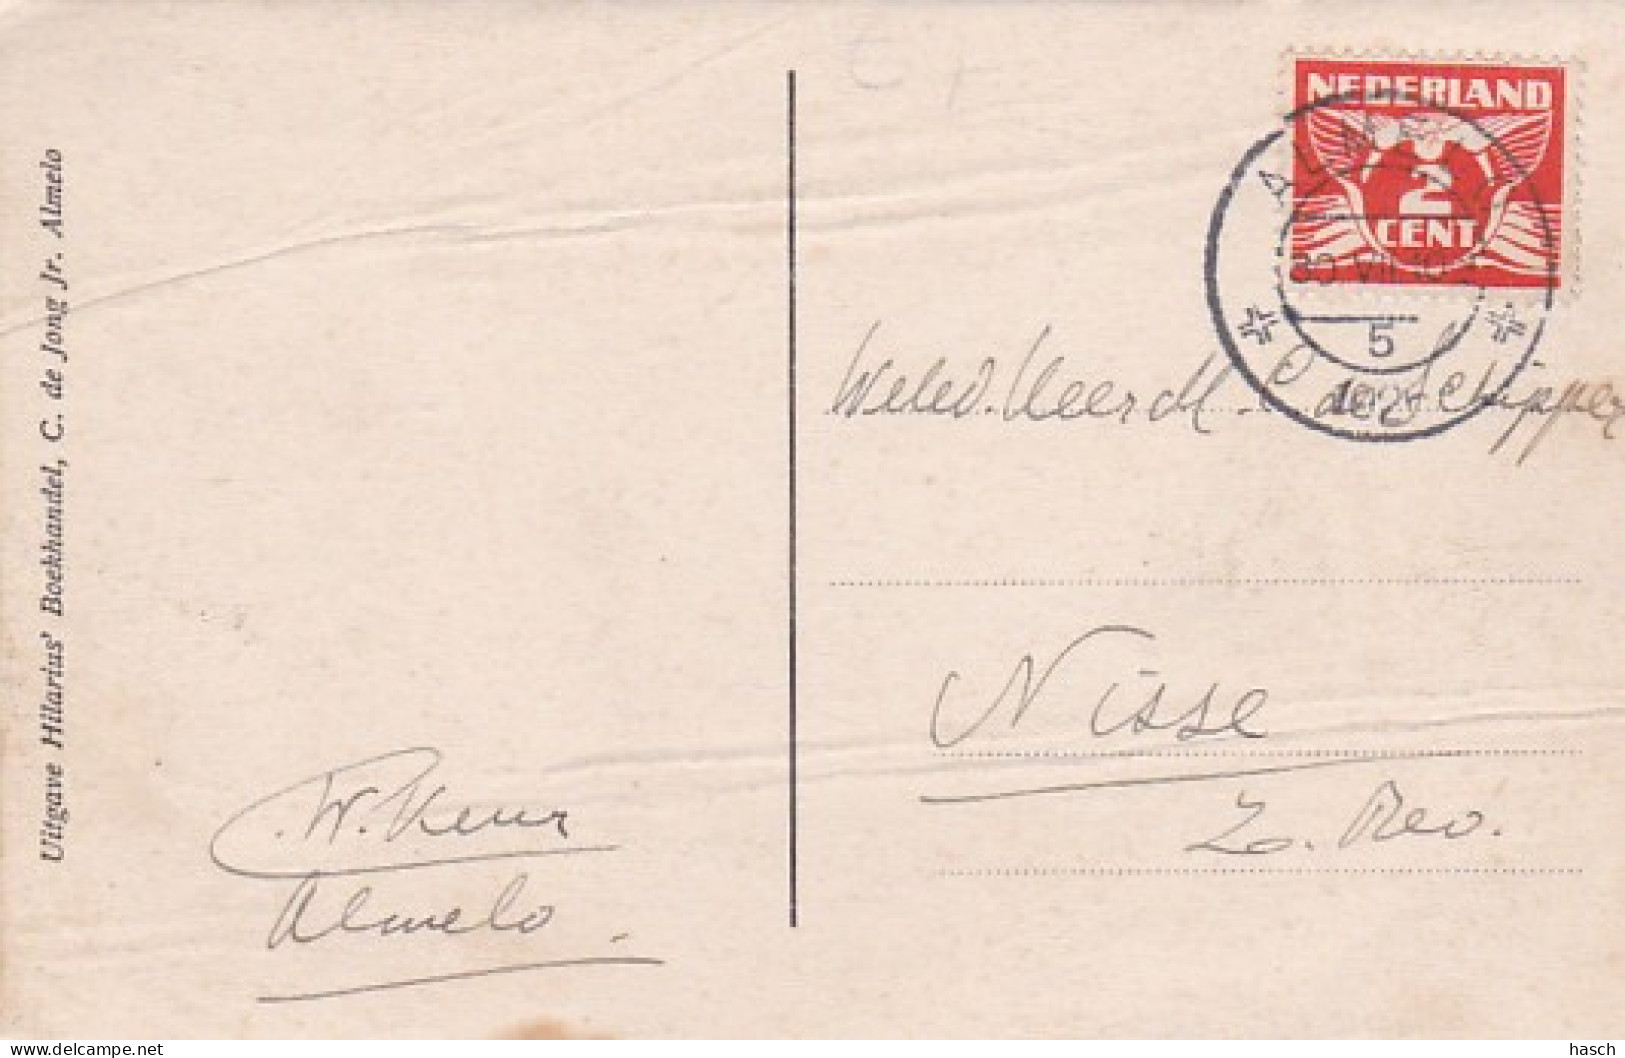 2606294Almelo, Bornsche Weg – 1910 (achterkant Is Aan Het Los Laten) - Almelo